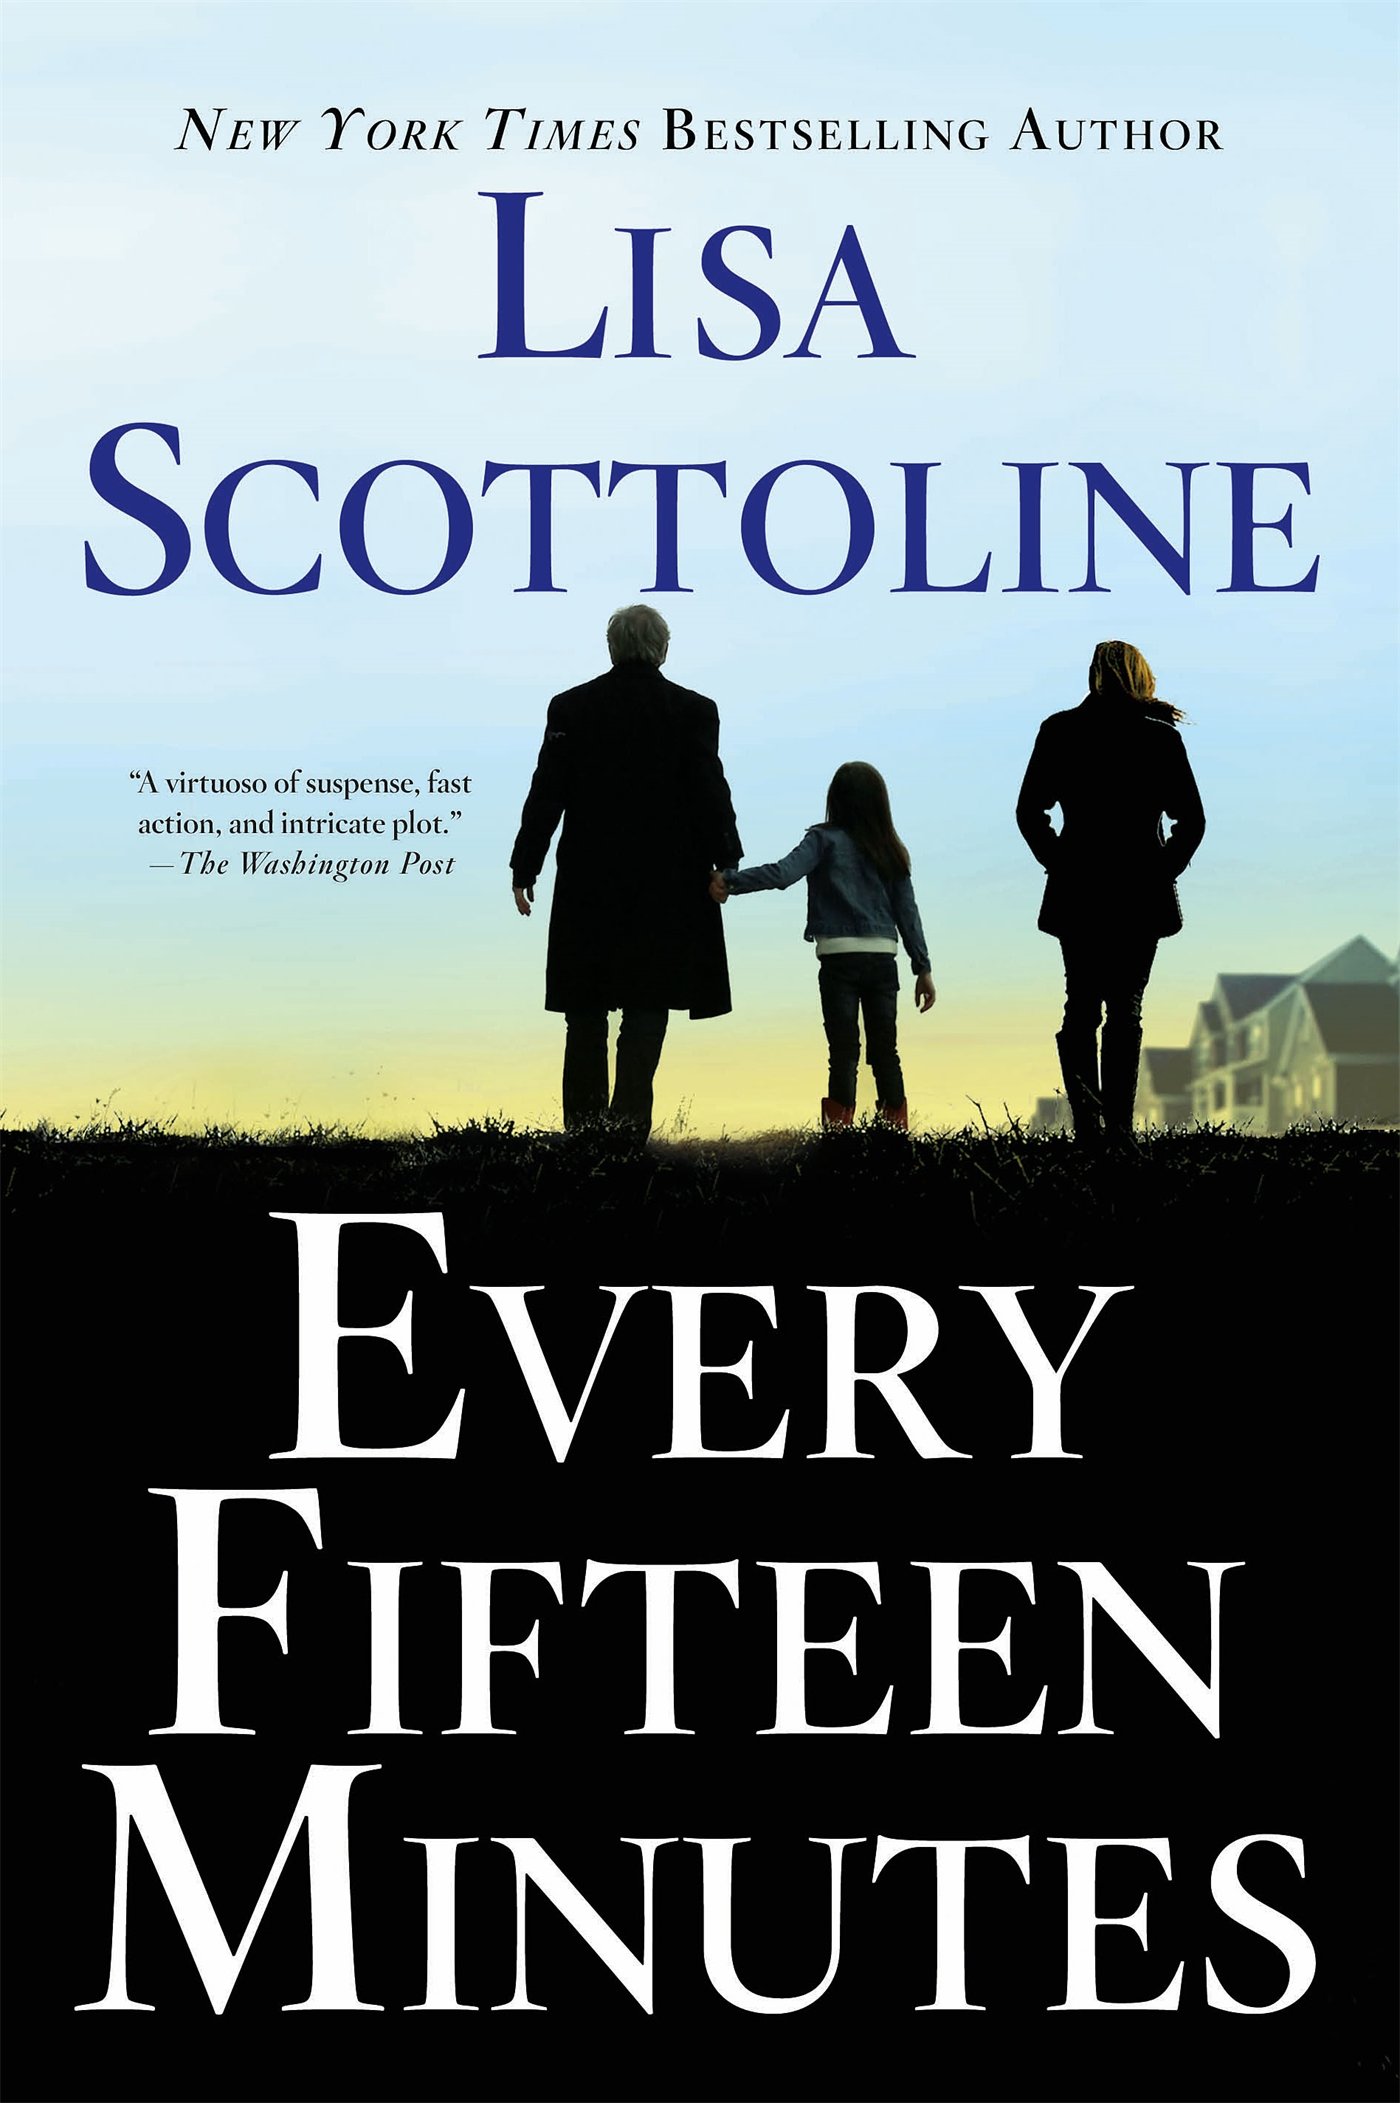 DBT 0209: Lisa Scottoline – Every Fifteen Minutes